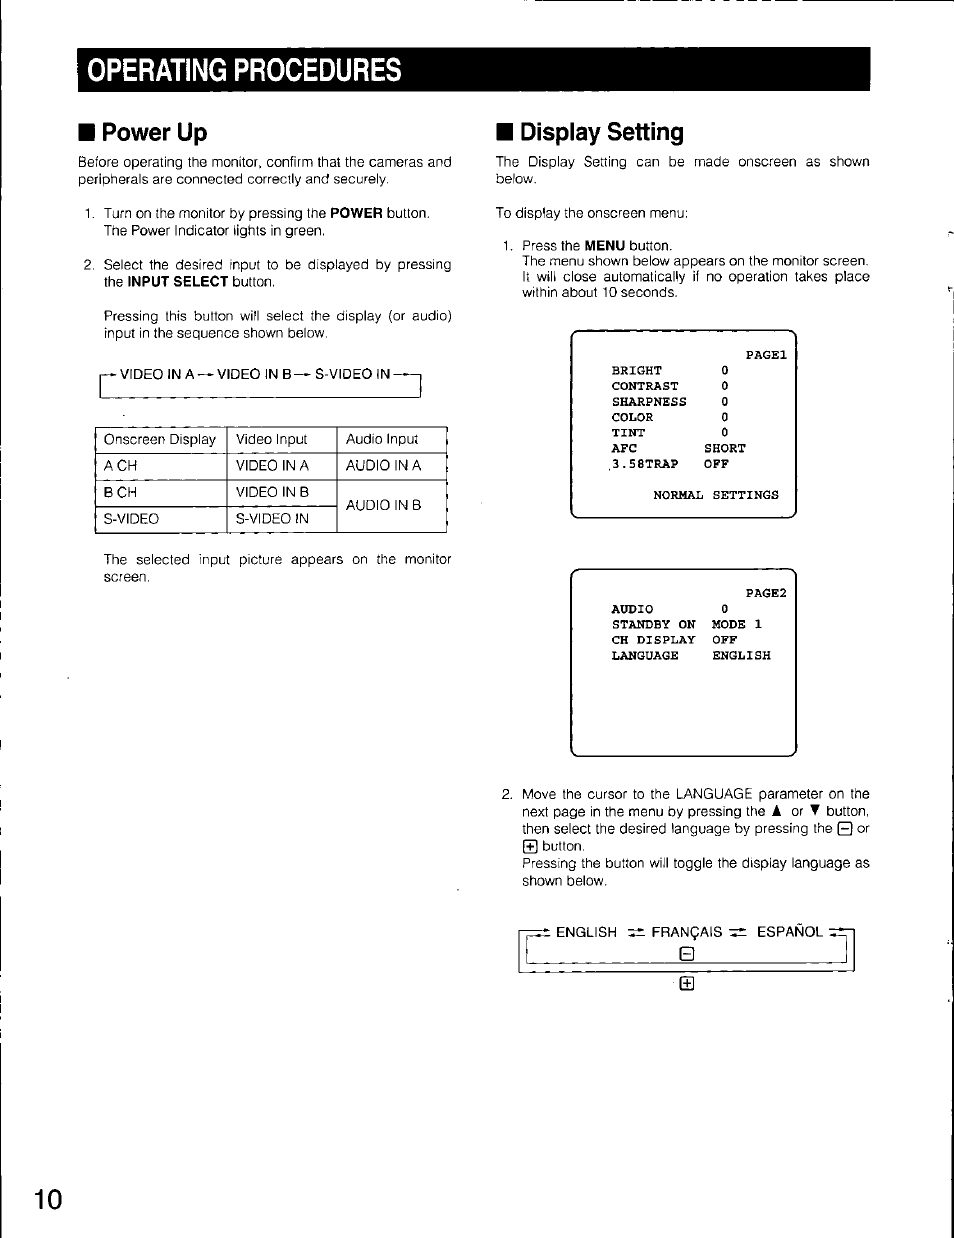 Operating procedures, Display setting, Power up | Panasonic WV-CM2080 Manuel d'utilisation | Page 10 / 32